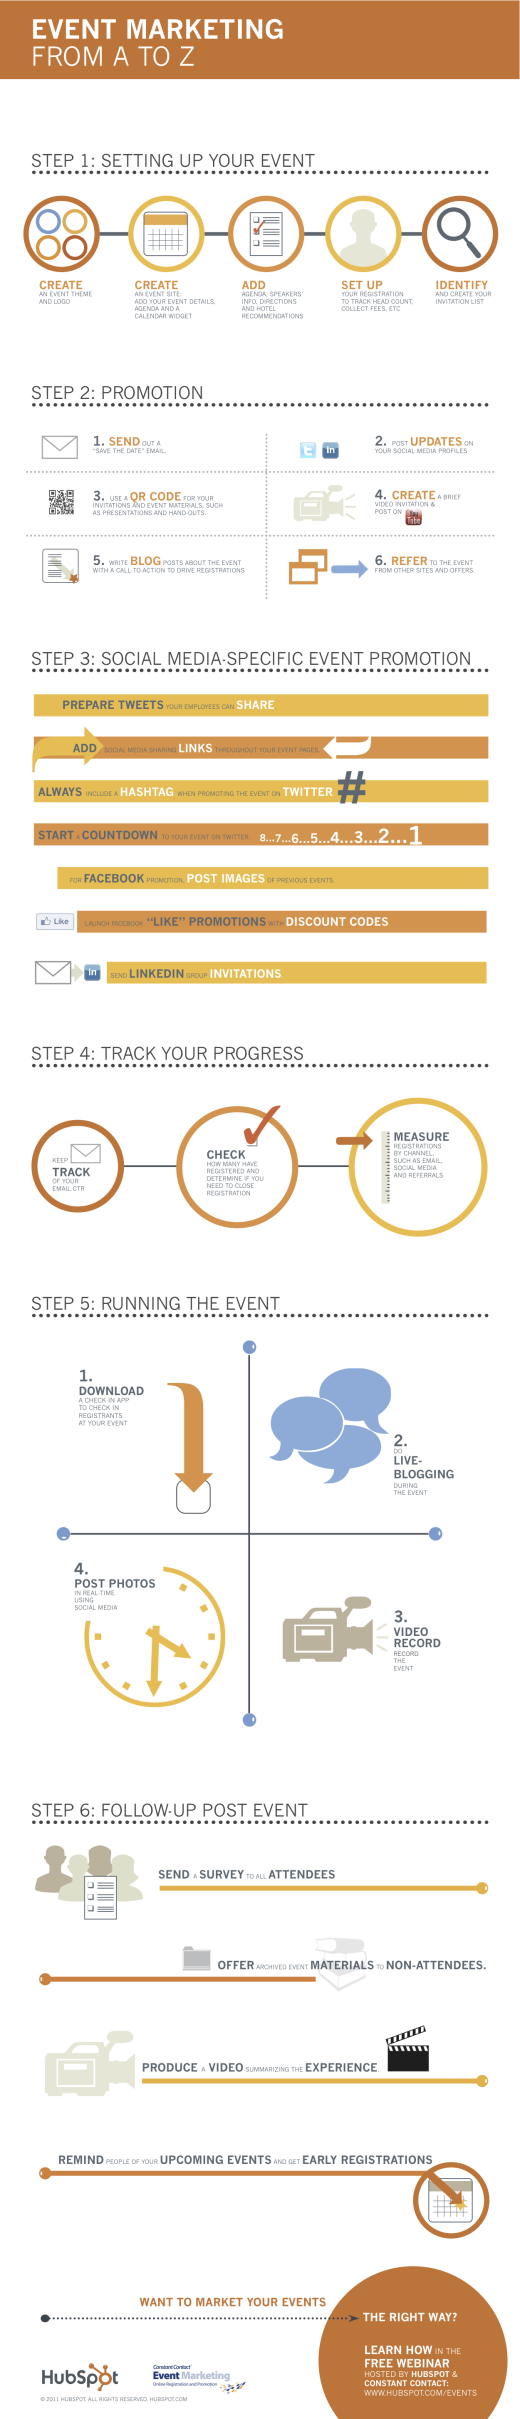 event_marketing_infographic